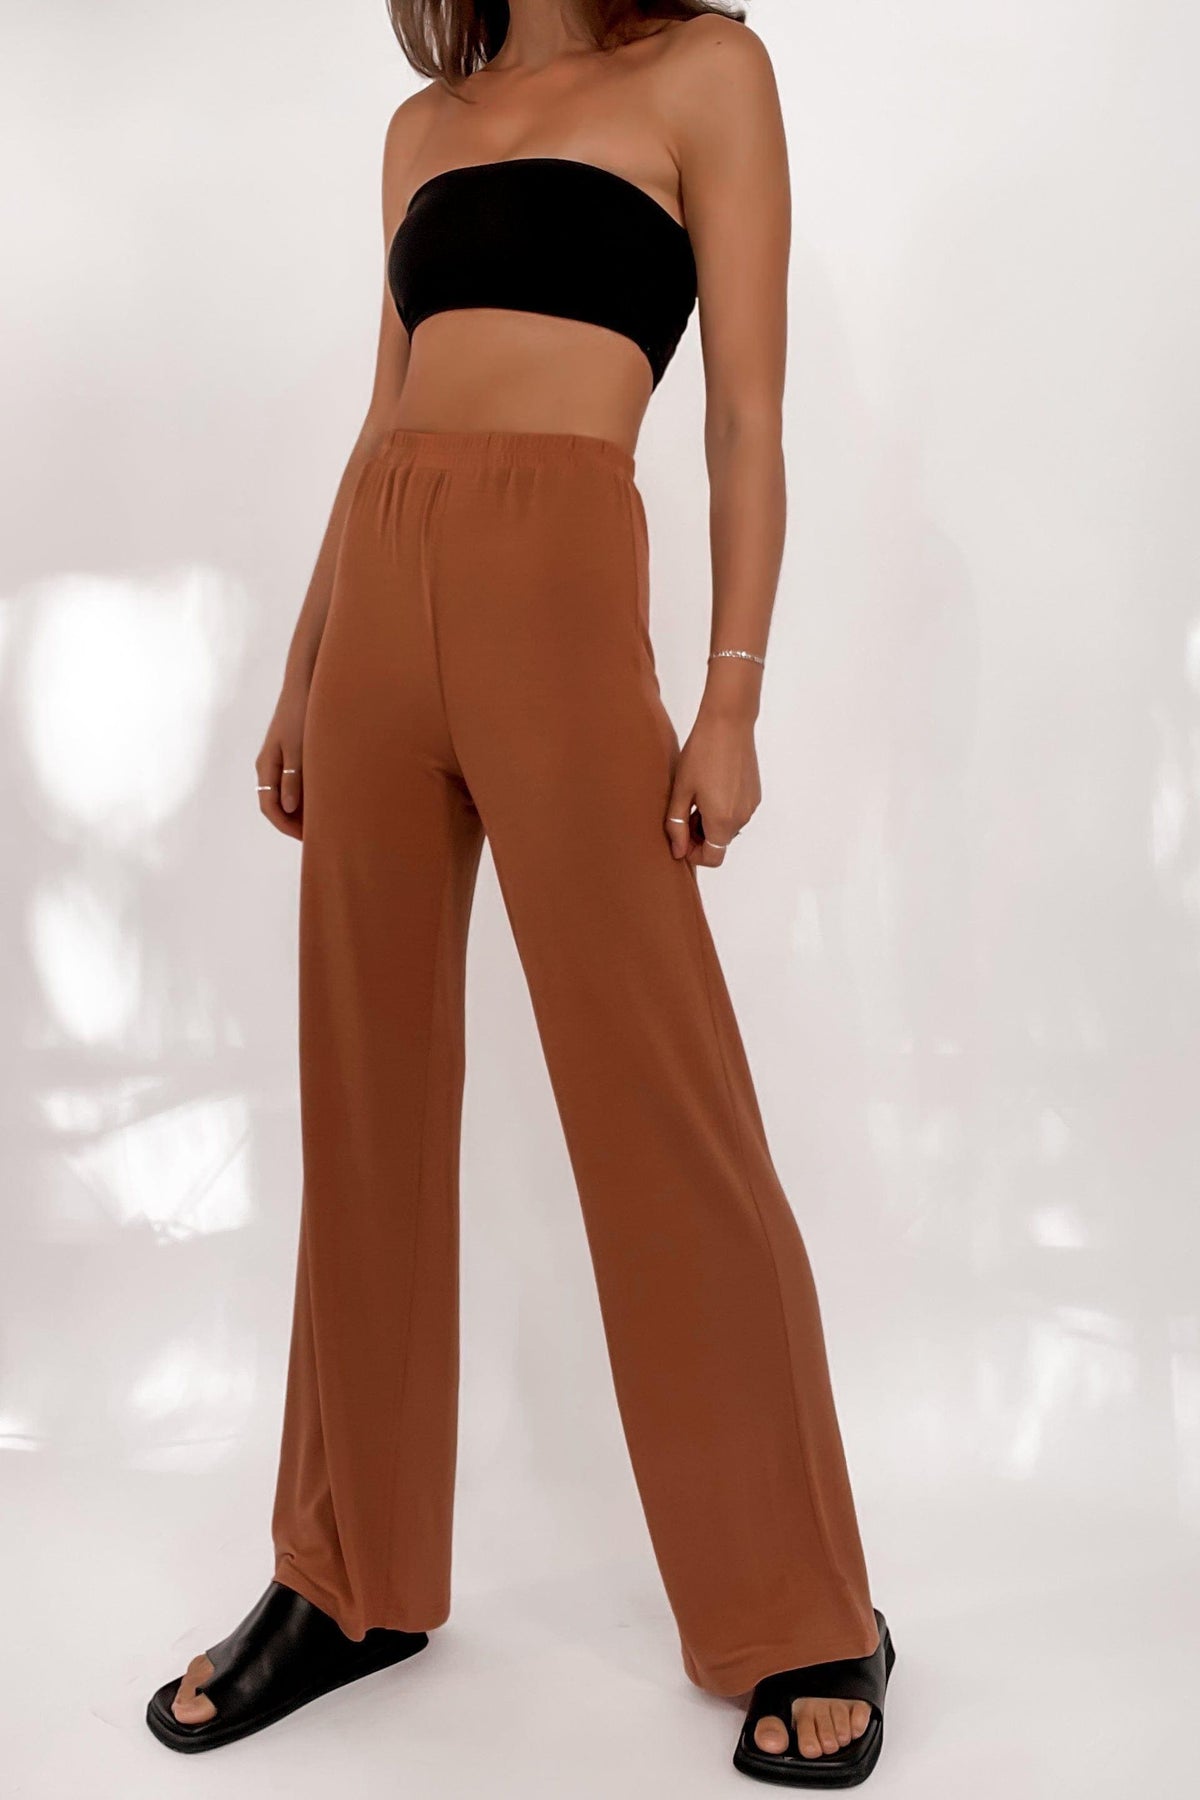 Dyjana Pants, BOTTOMS, BROWN, COTTON, ORANGE, PANTS, SALE, , Our New Dyjana Pants is only $56.00-We Have The Latest Pants | Shorts | Skirts @ Mishkah Online Fashion Boutique-MISHKAH